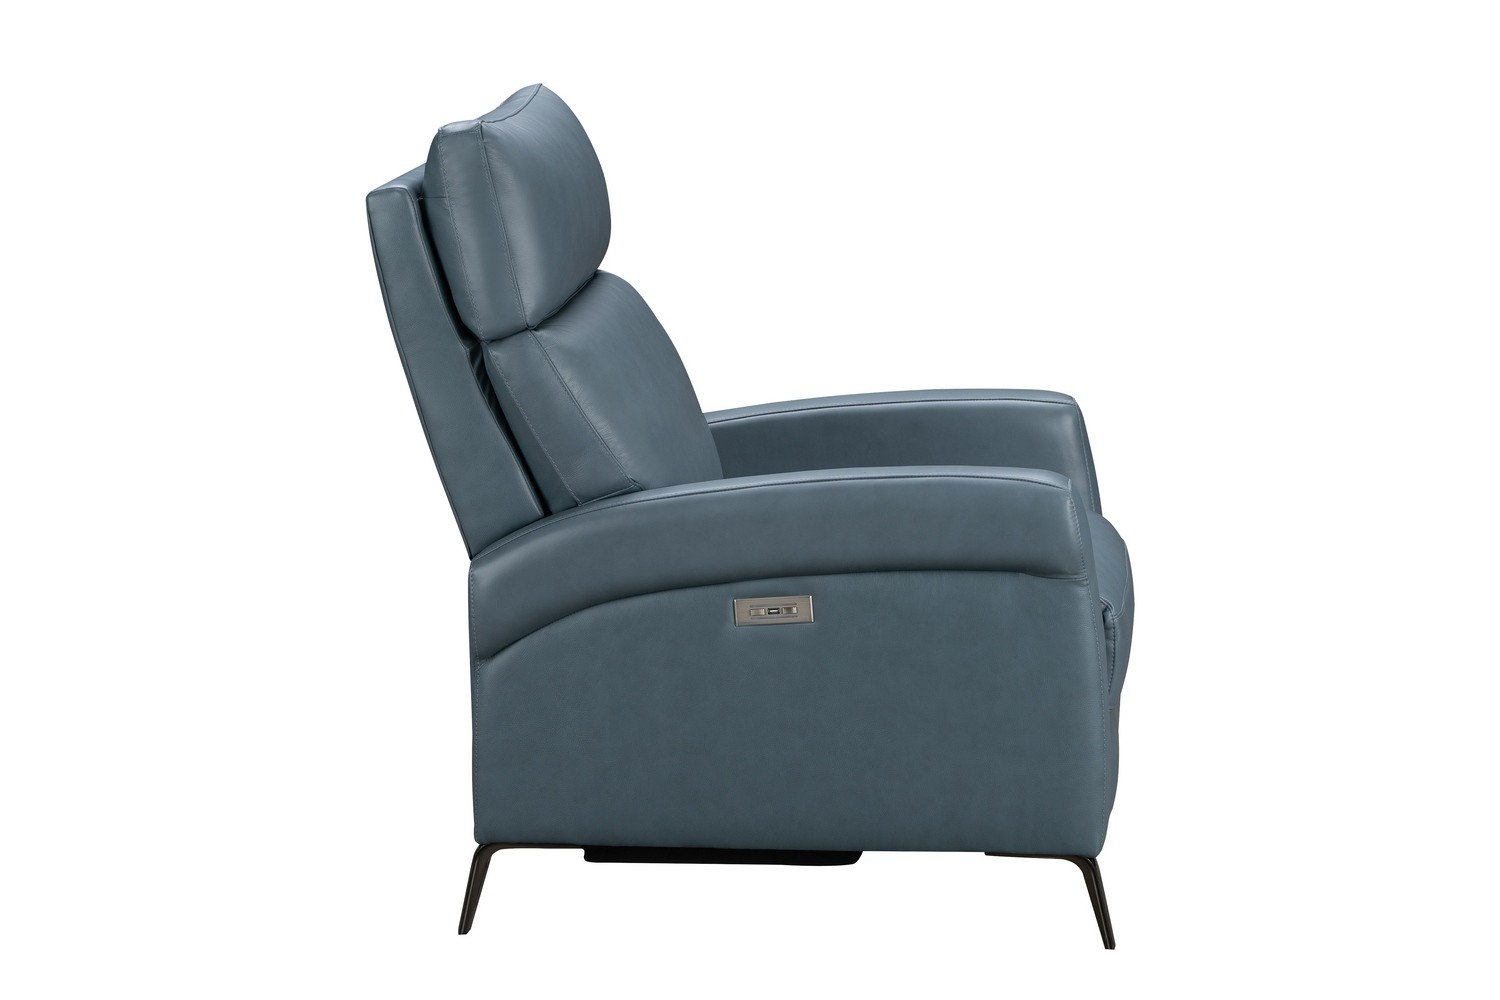 Barcalounger Simon Power Recliner Chair with Power Head Rest - Masen Bluegray/Leather Match